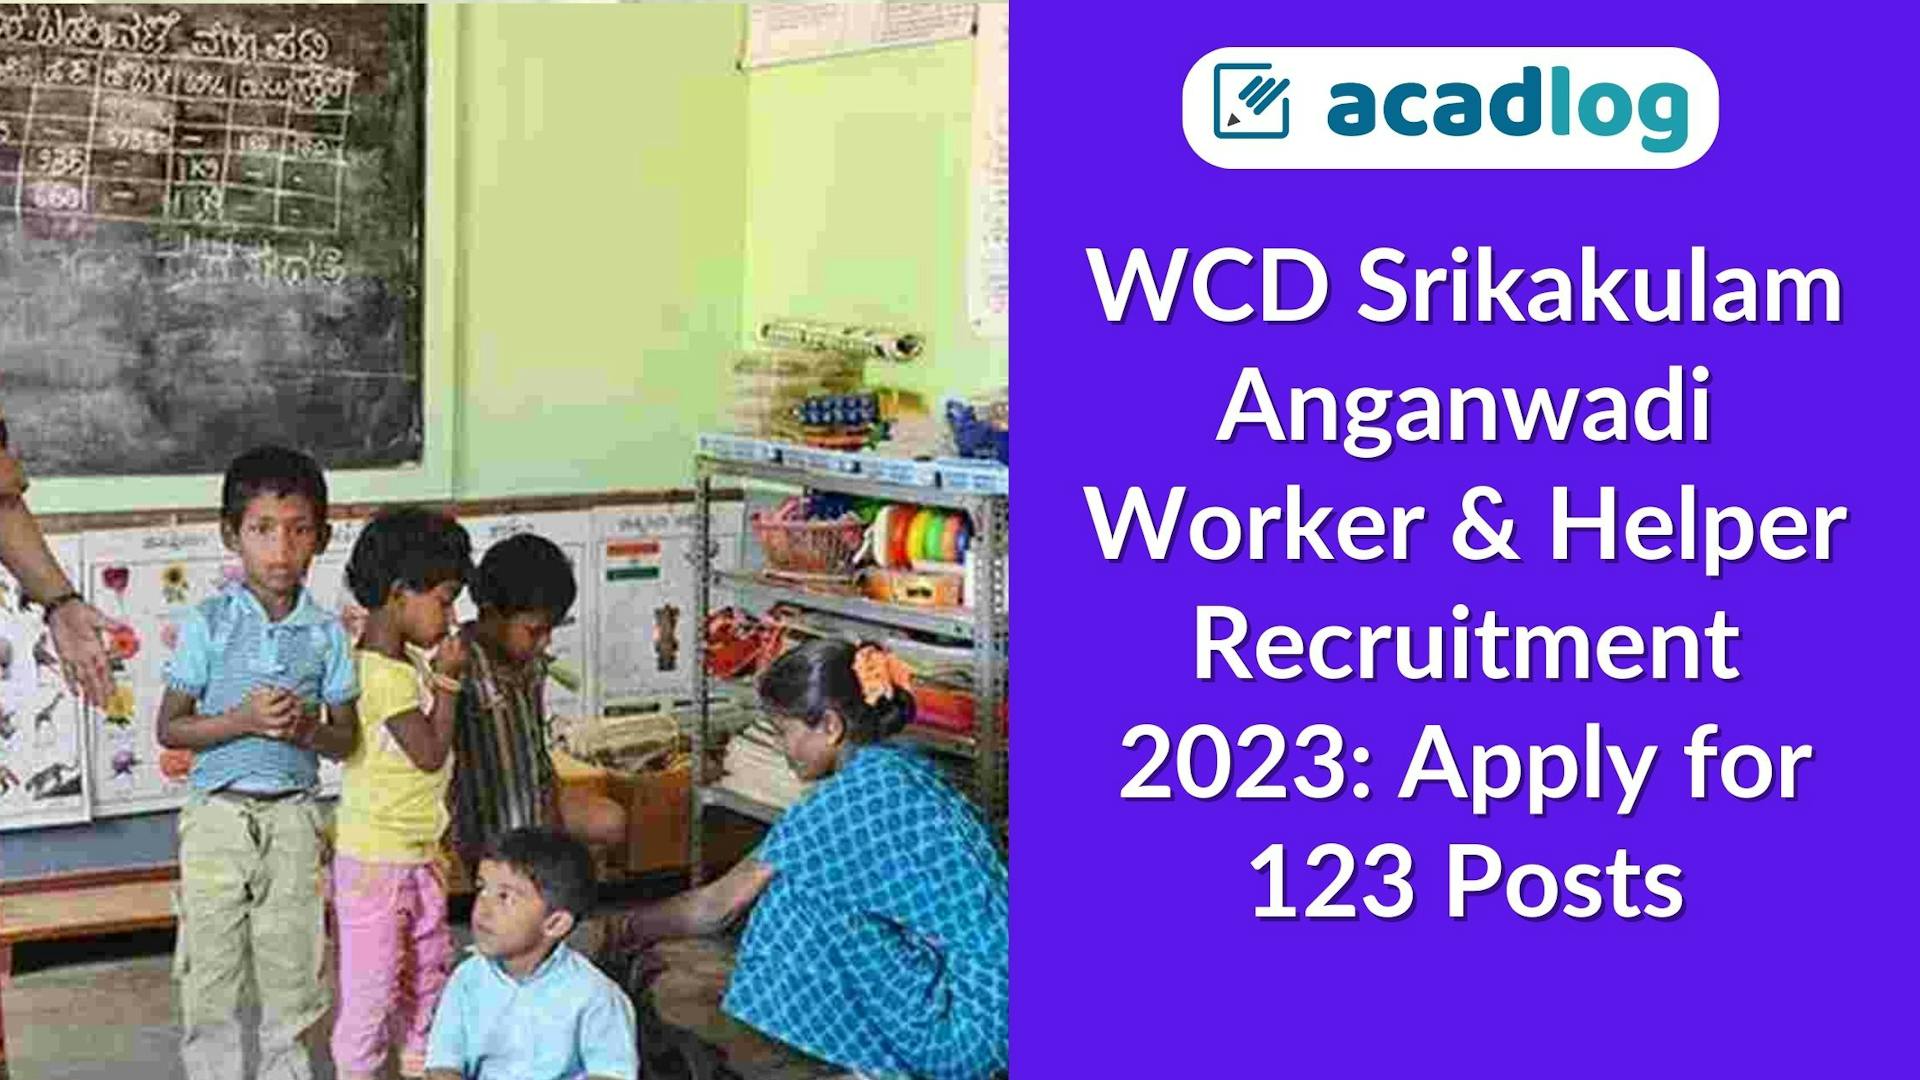 WCD Srikakulam Anganwadi Worker & Helper Recruitment 2023